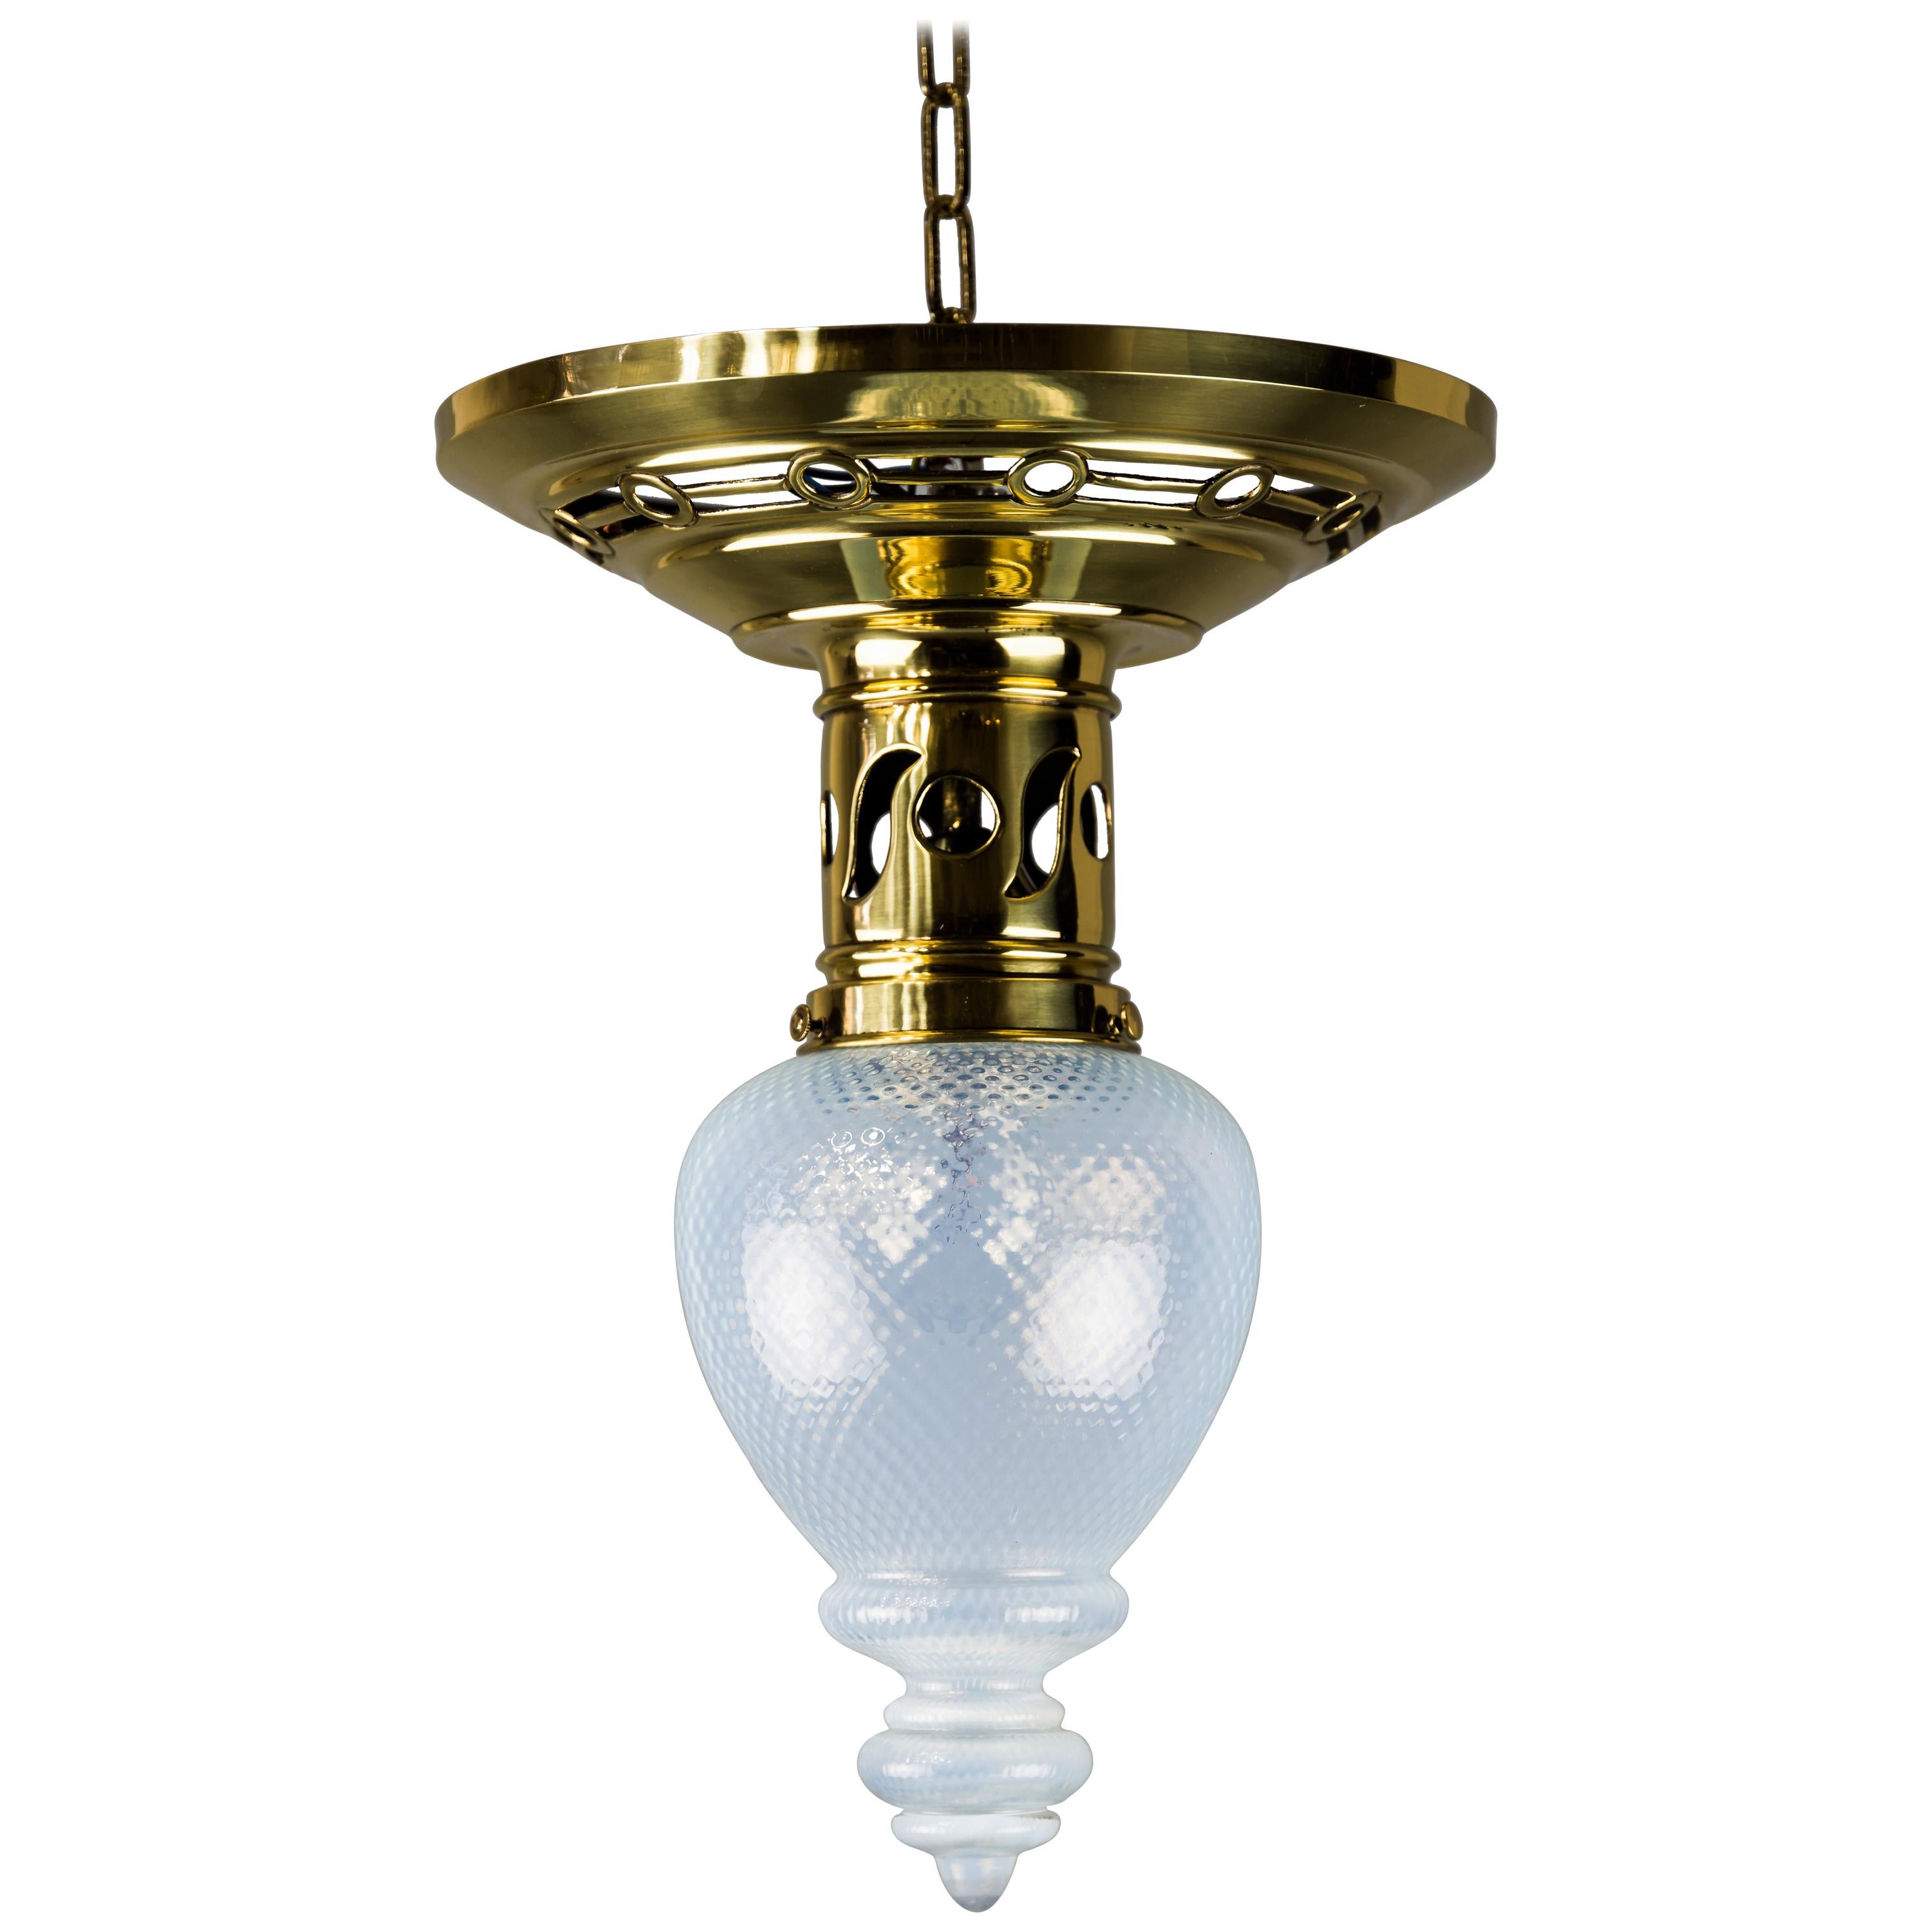 Jugendstil Ceiling Lamp circa 1908 with Original Opaline Glass Shade